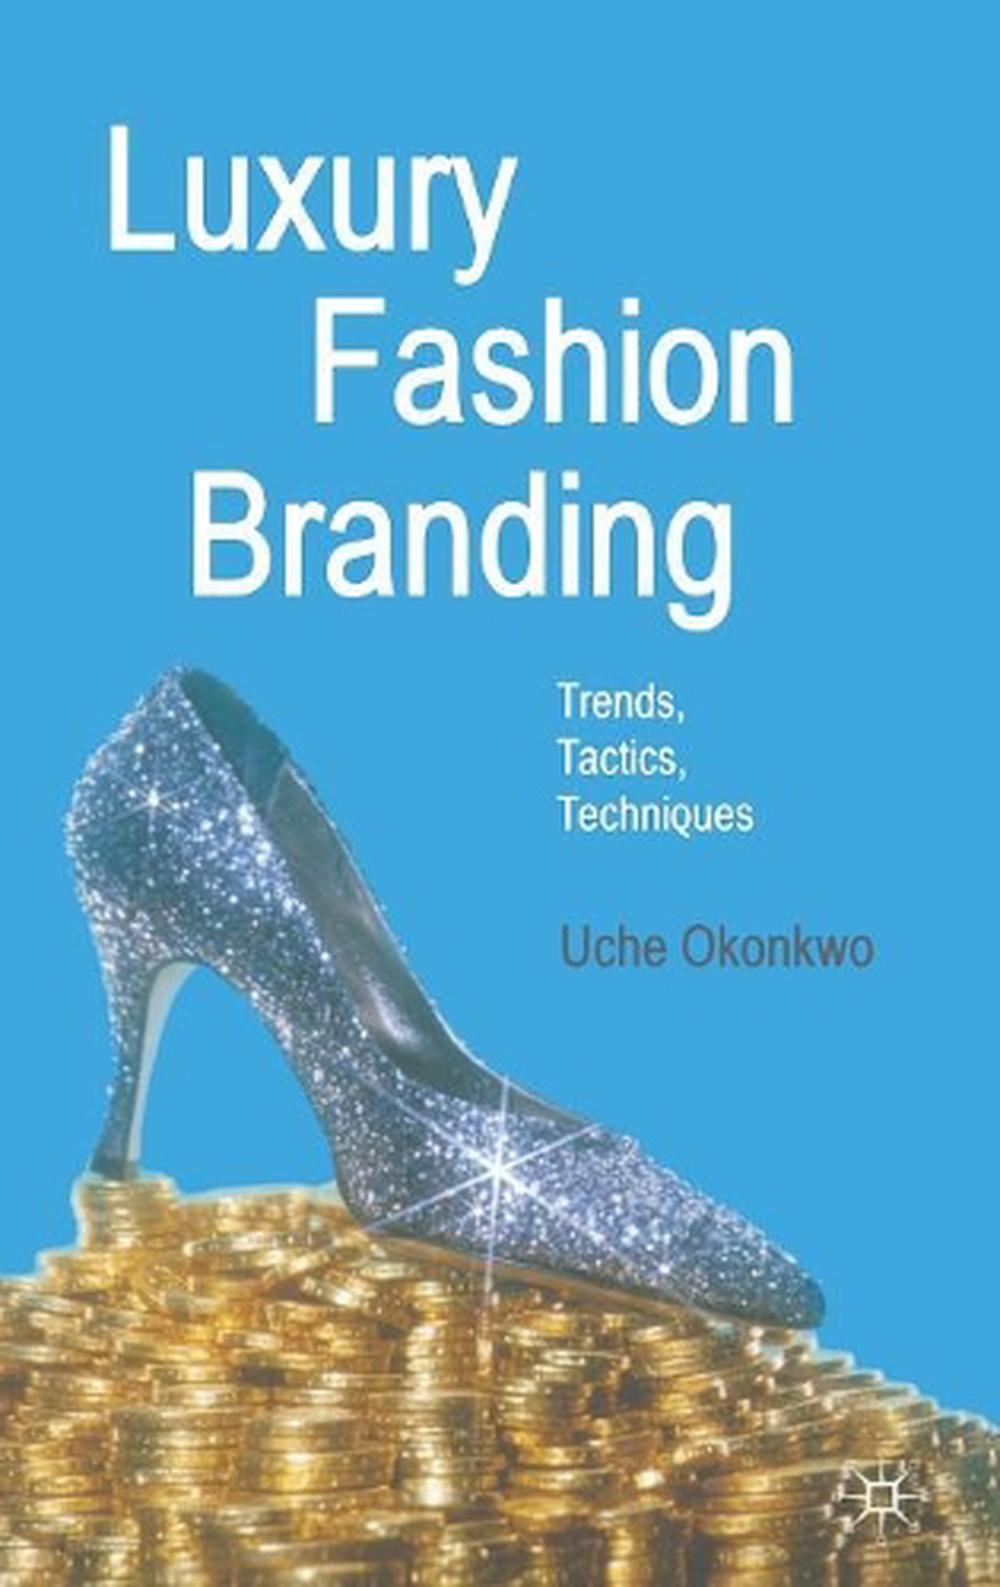 Luxury Fashion Branding Trends, Tactics, Techniques by Uche Okonkwo (English) H 9780230521674